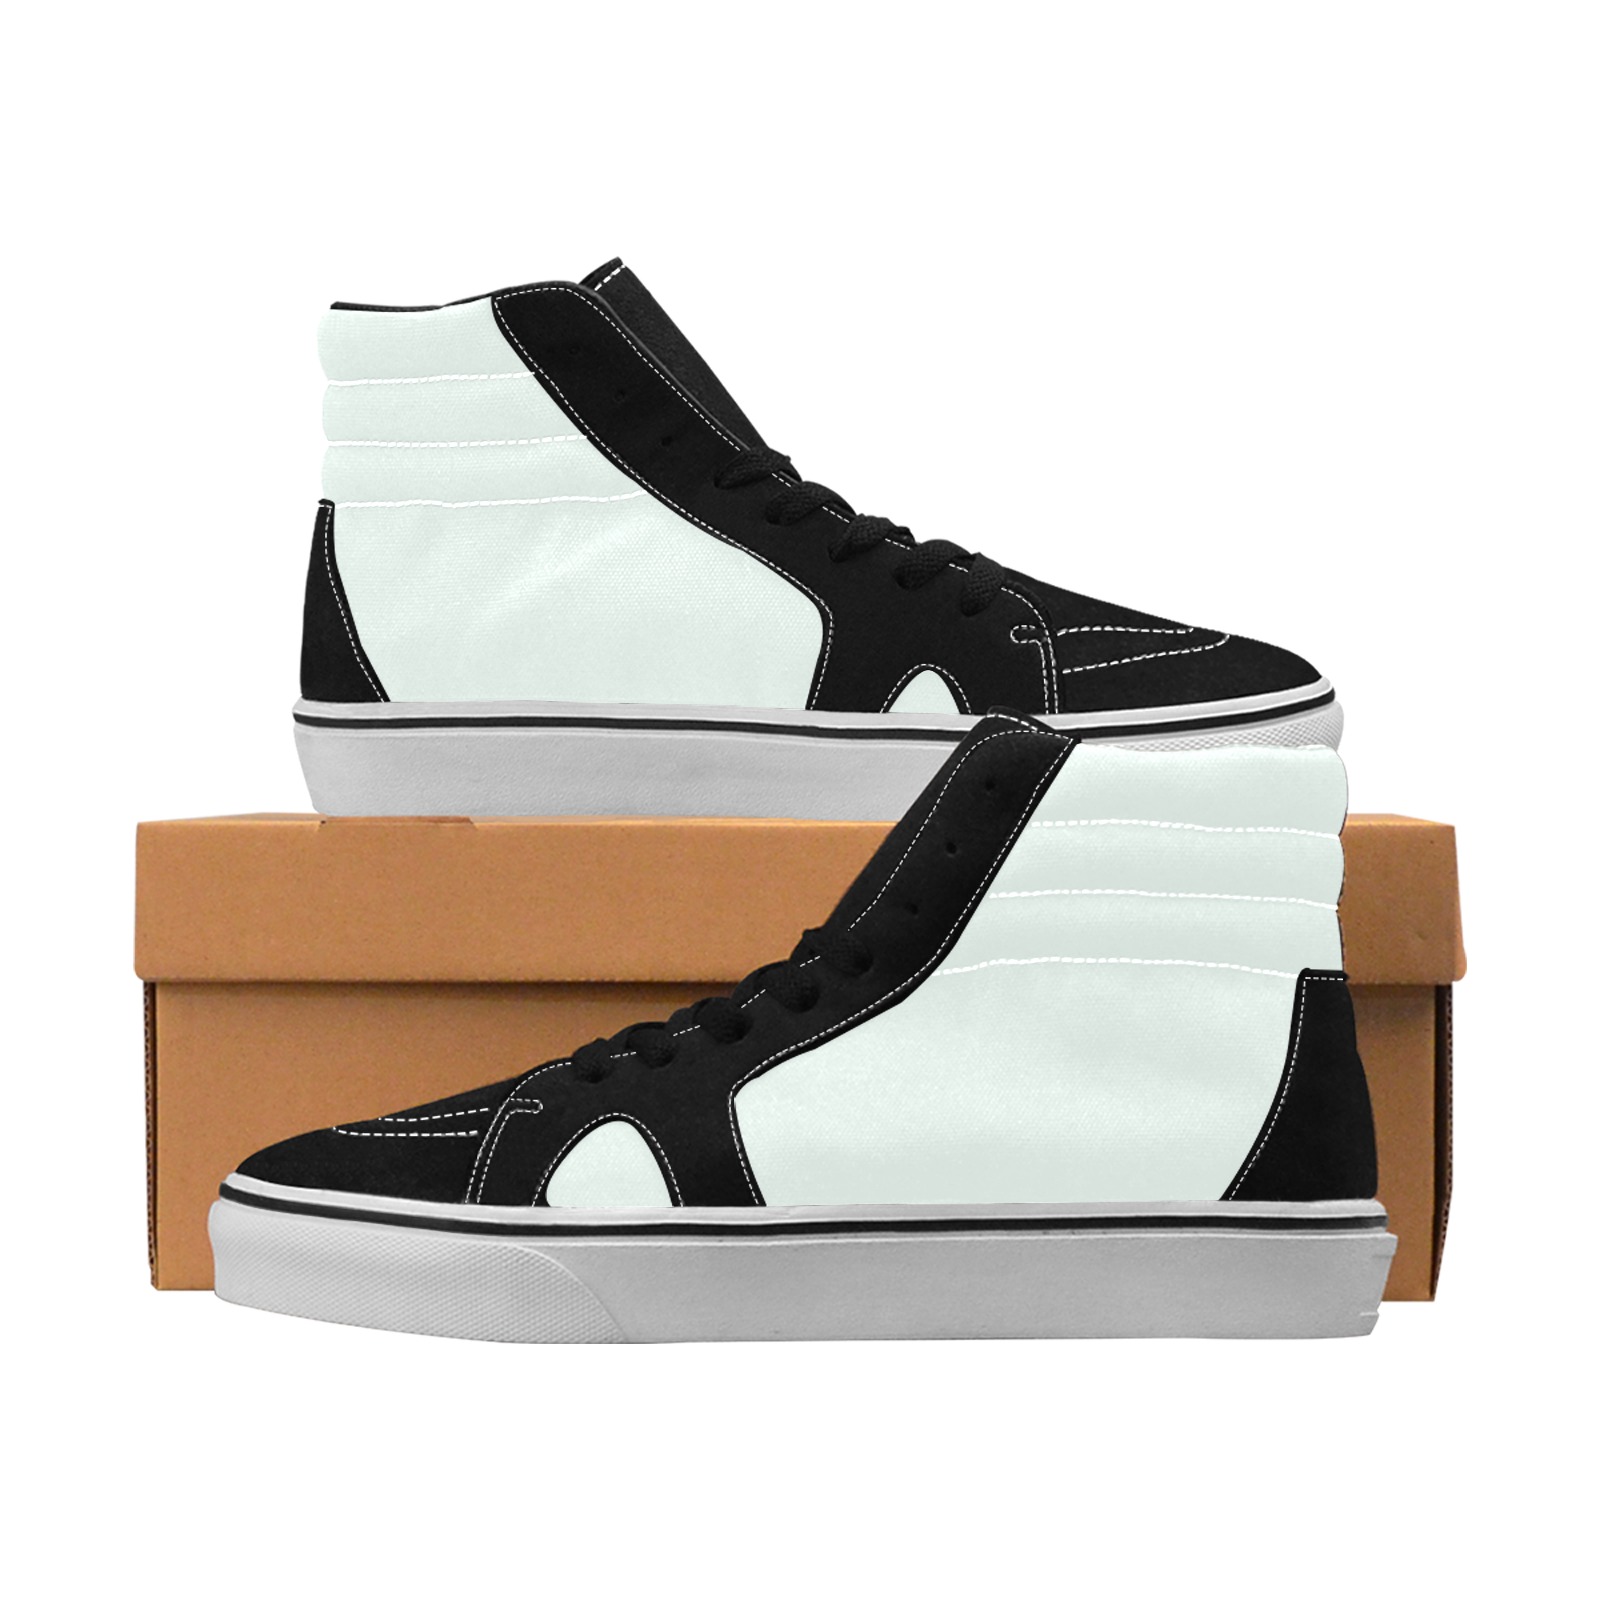 color mint cream Women's High Top Skateboarding Shoes (Model E001-1)